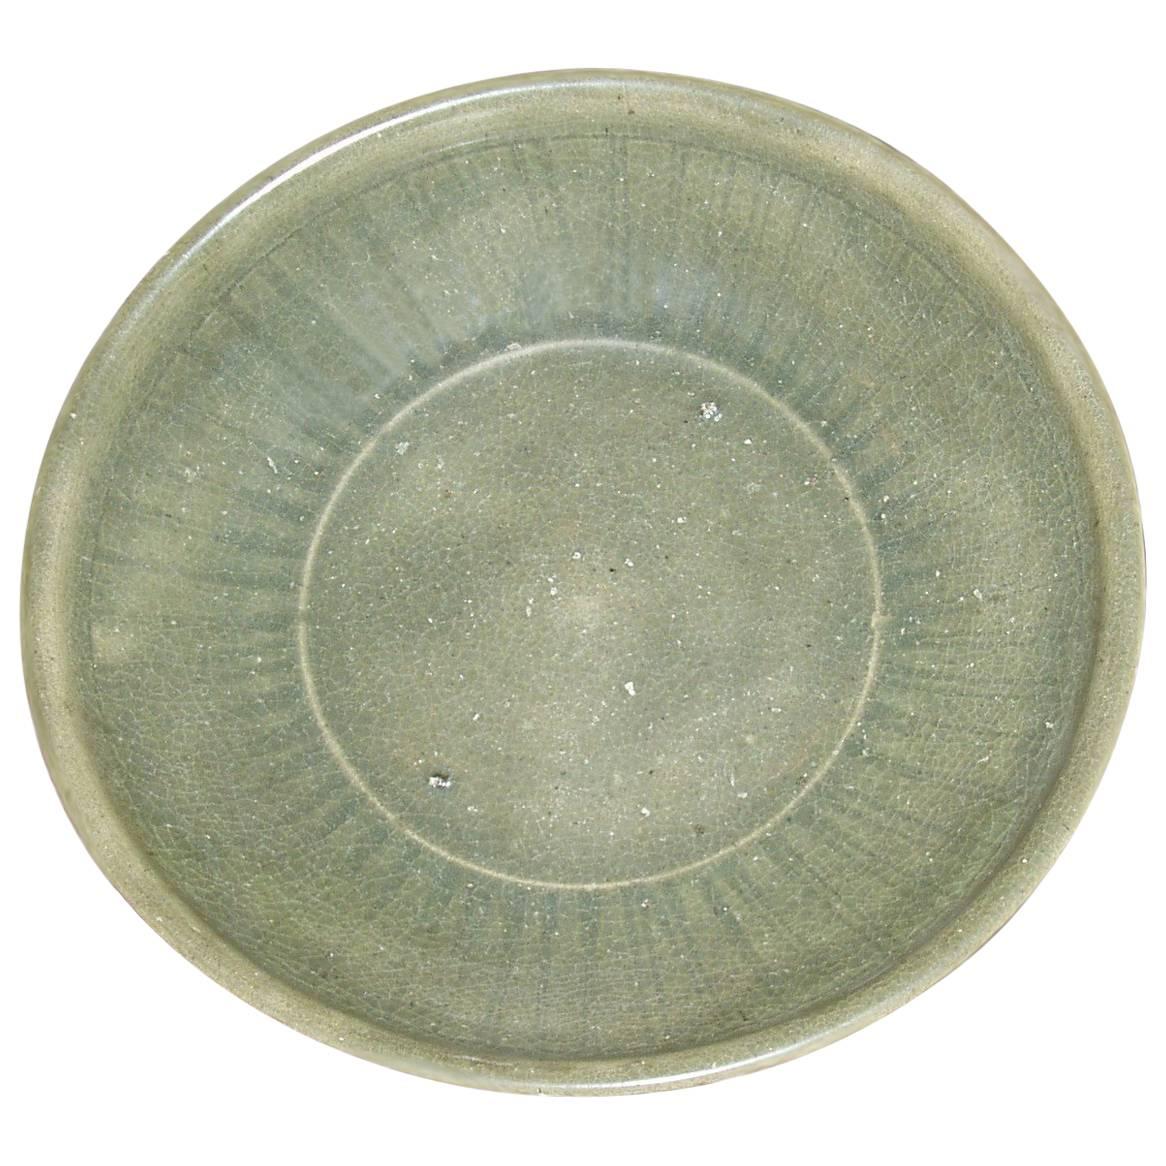 Celadon Plate from Burma, circa 15th-16th Century